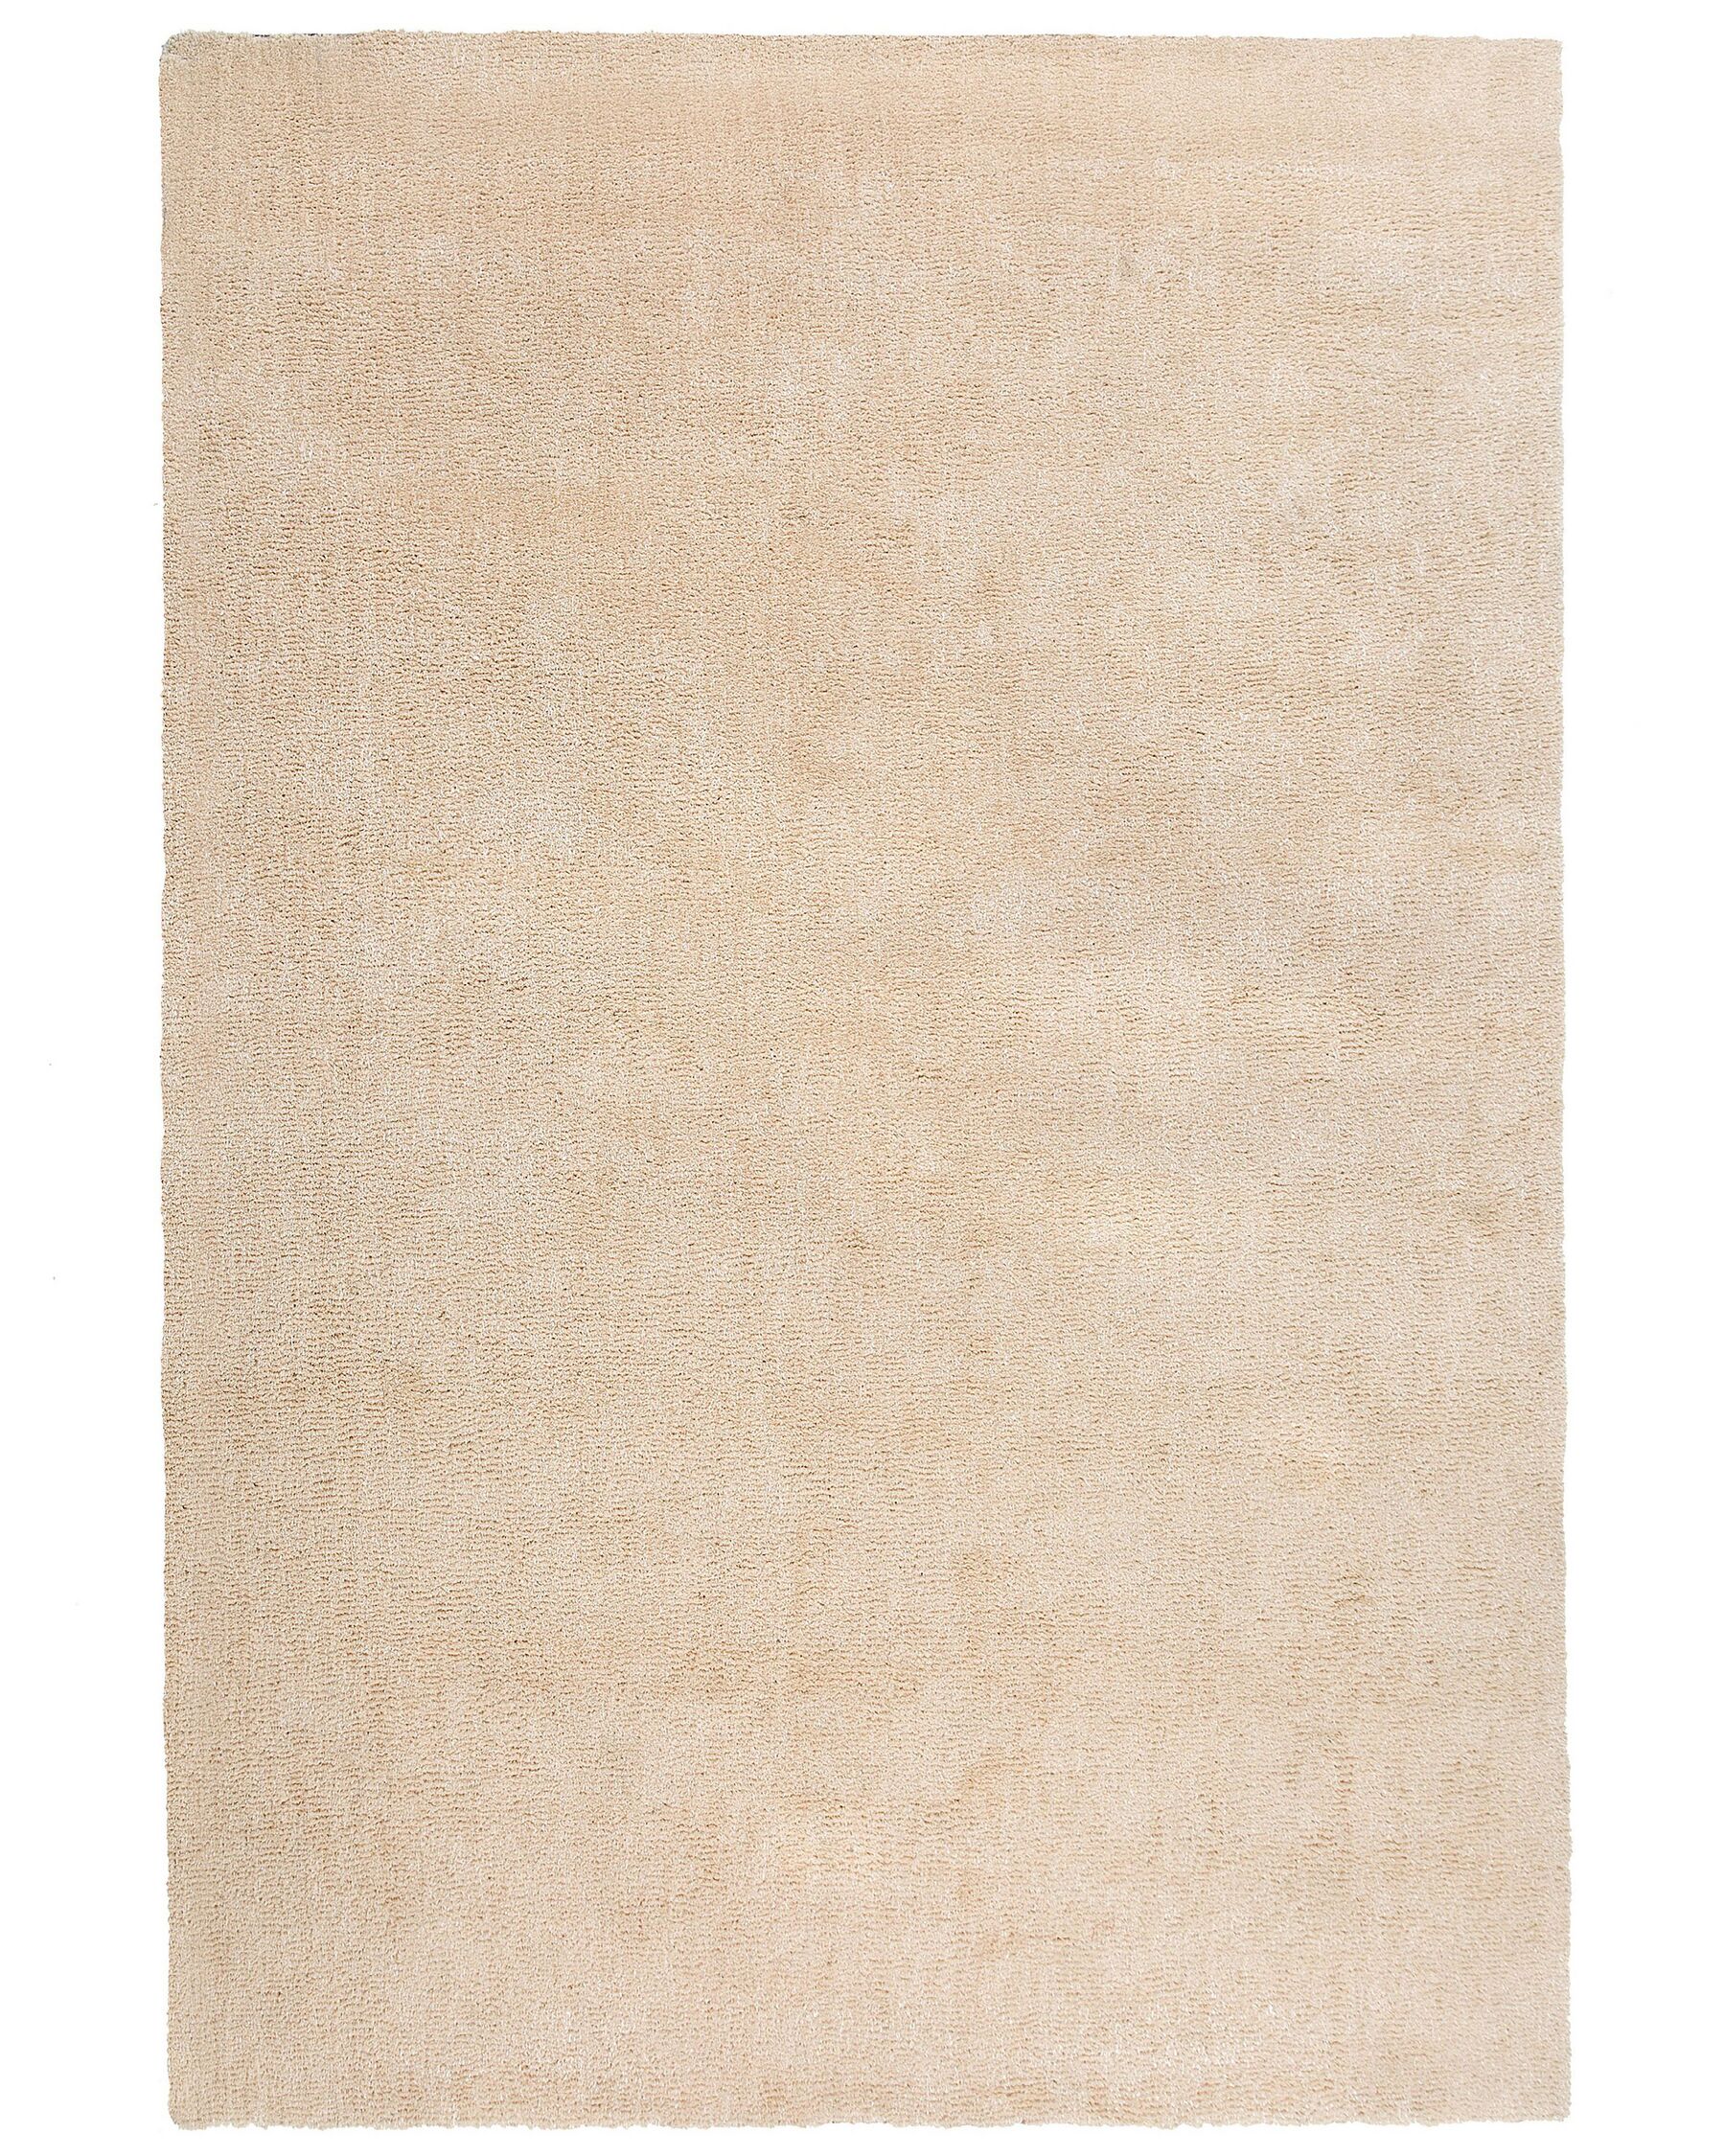 Tappeto shaggy beige chiaro 200 x 300 cm DEMRE_683595